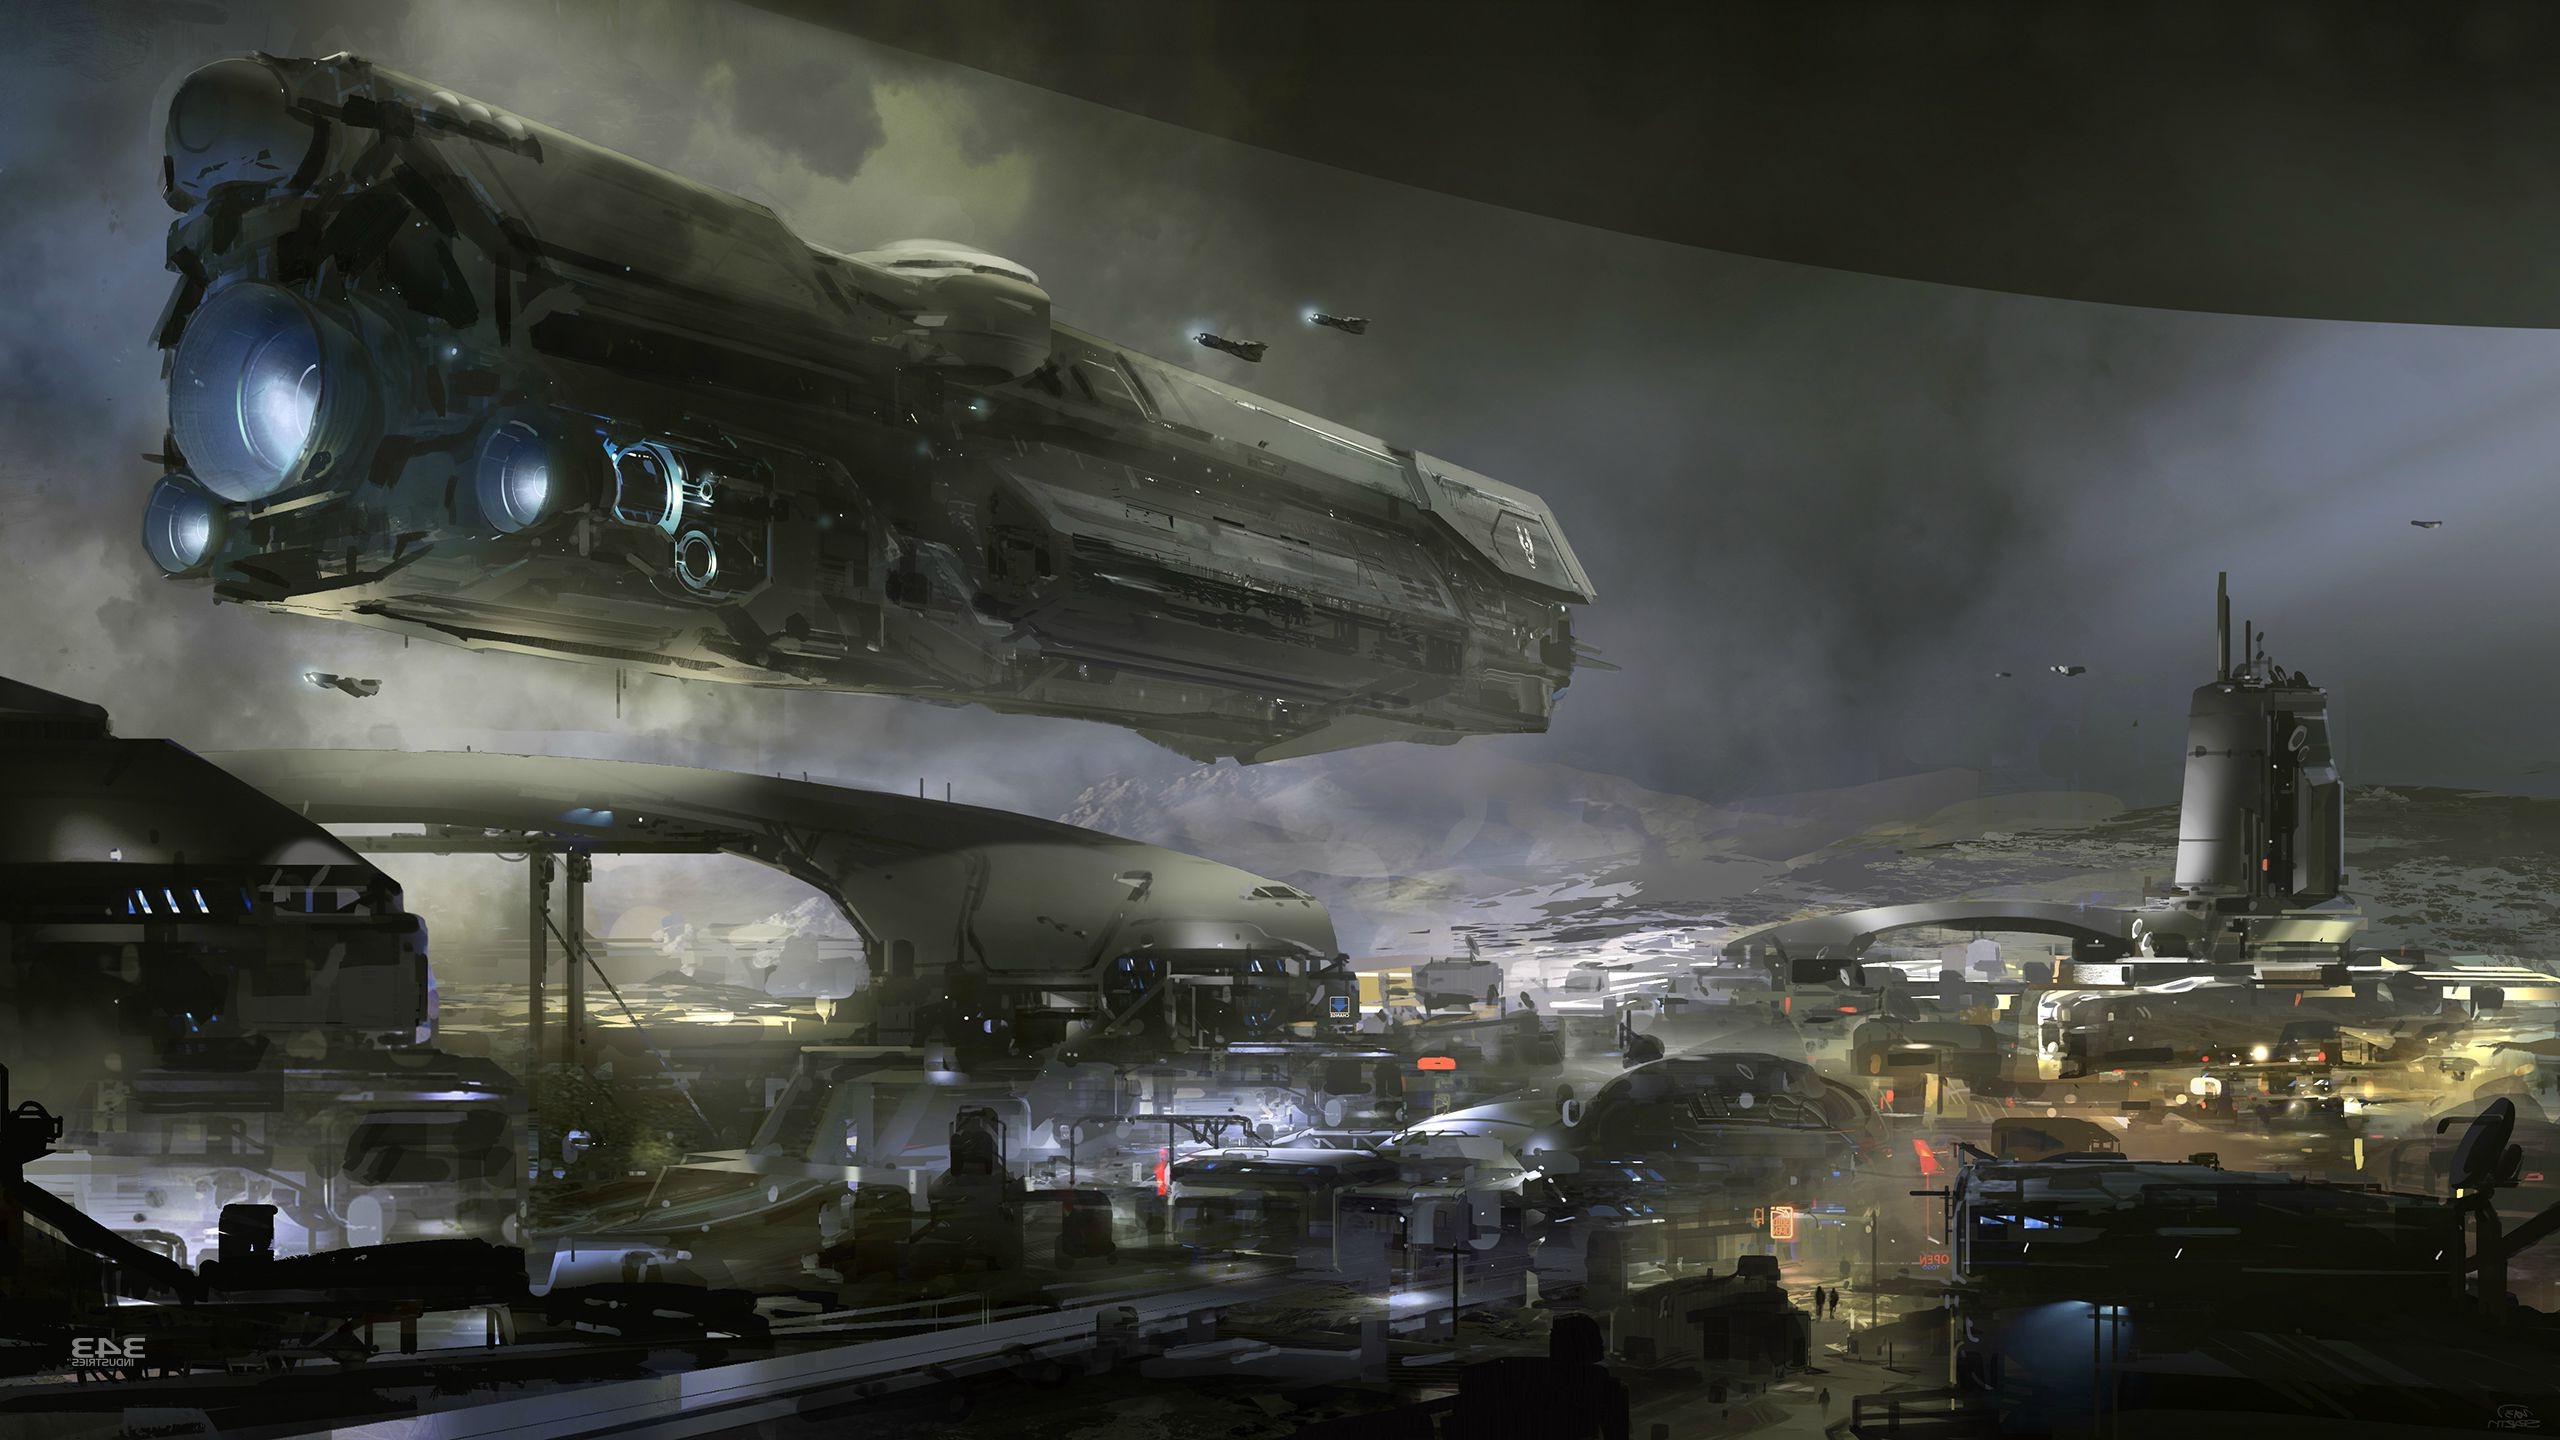 Halo Spaceship Unsc Infinity Digital Art Wallpapers Hd Desktop And